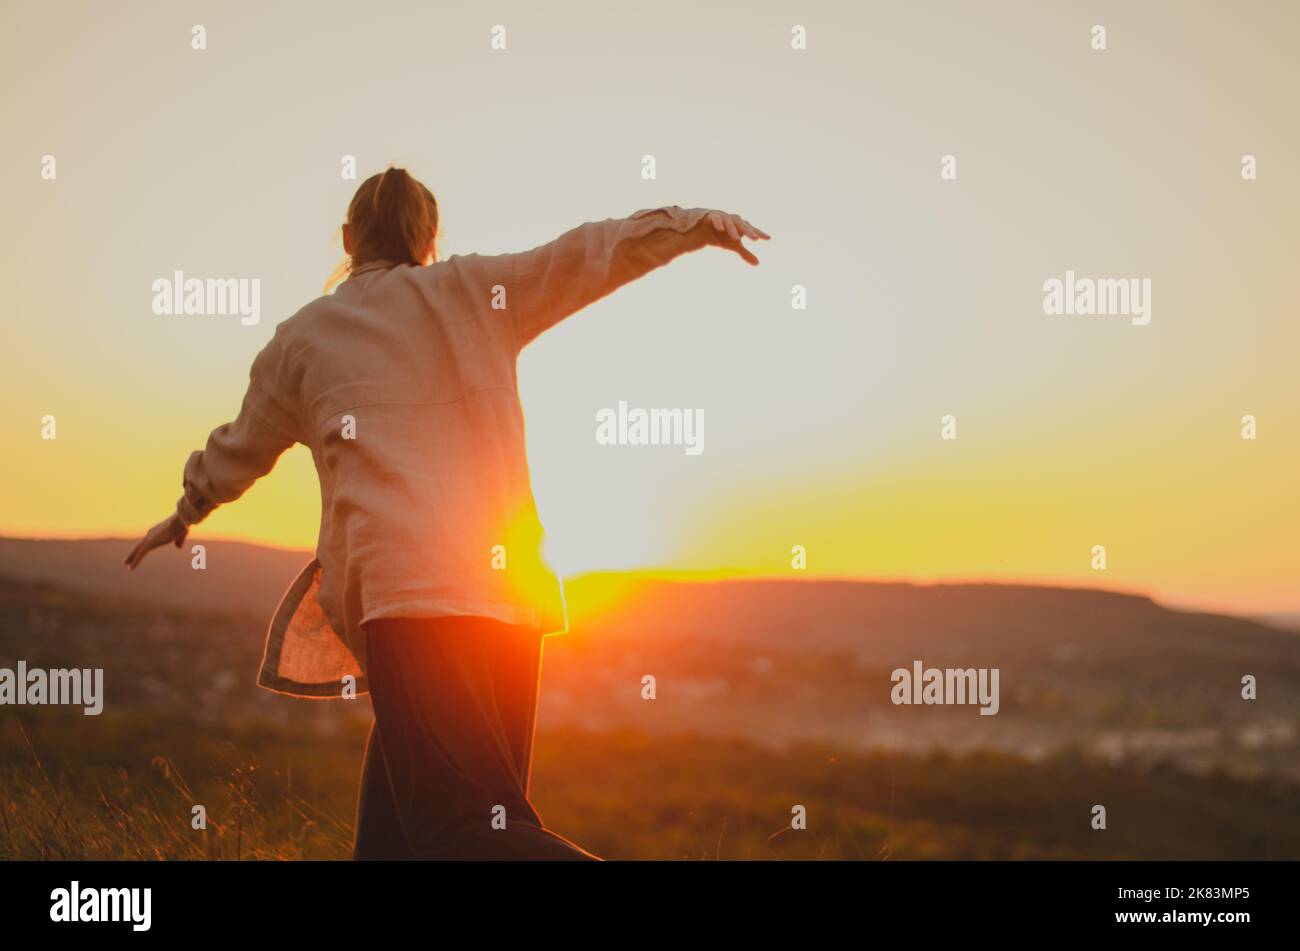 Frau macht intuitive Bewegung auf Hügel bei Sonnenuntergang Stockfoto